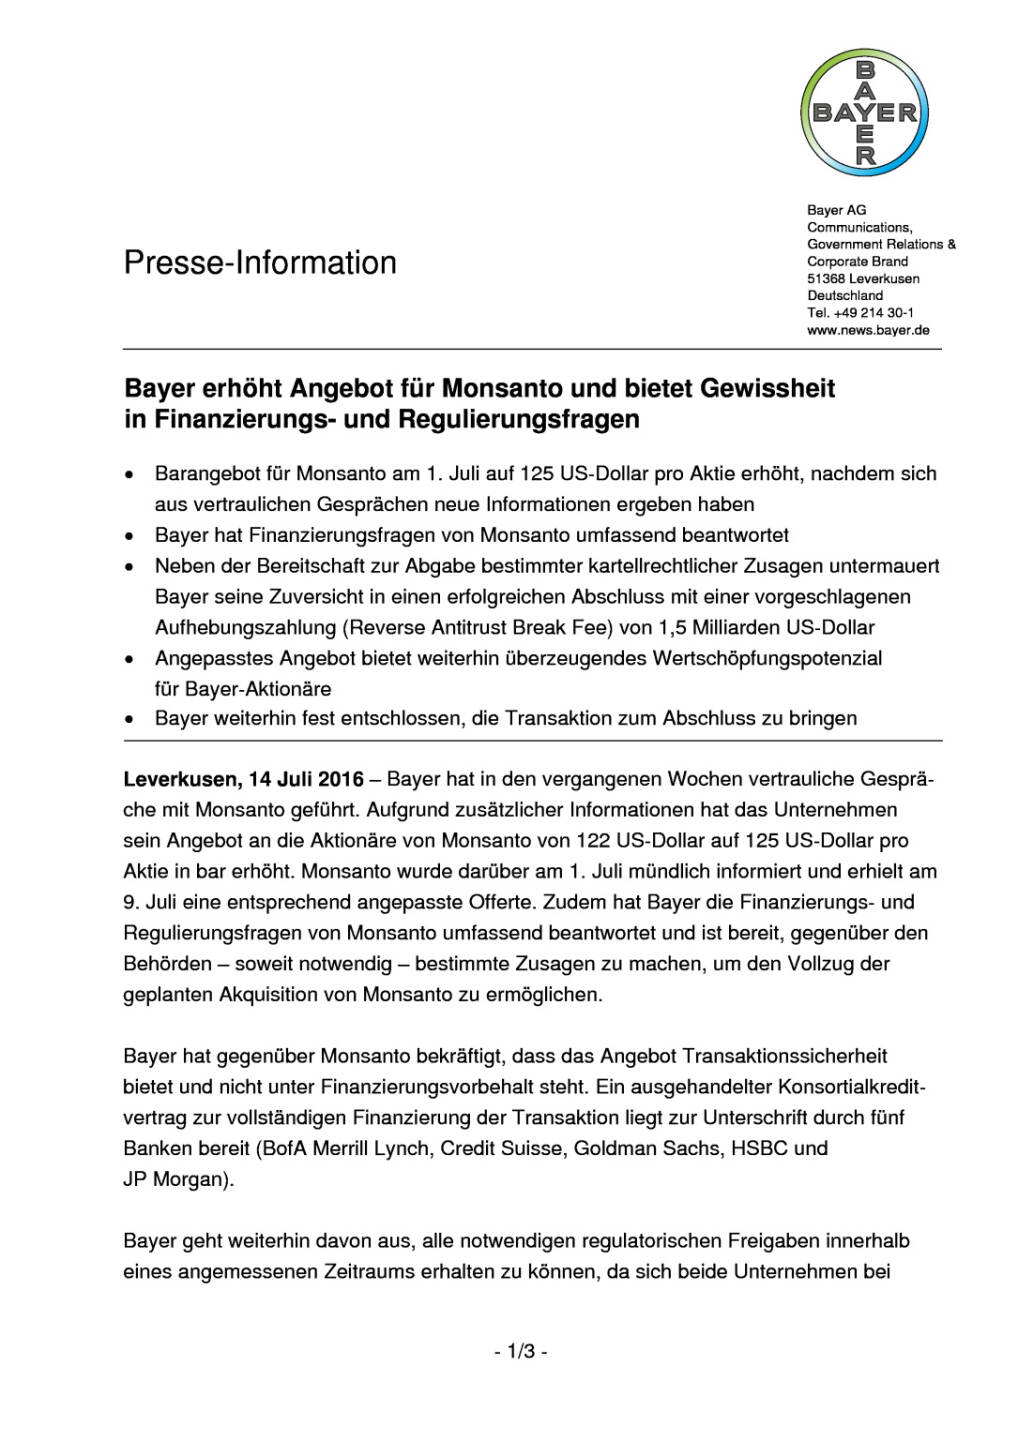 Bayer erhöht Angebot für Monsanto, Seite 1/3, komplettes Dokument unter http://boerse-social.com/static/uploads/file_1418_bayer_erhoht_angebot_fur_monsanto.pdf